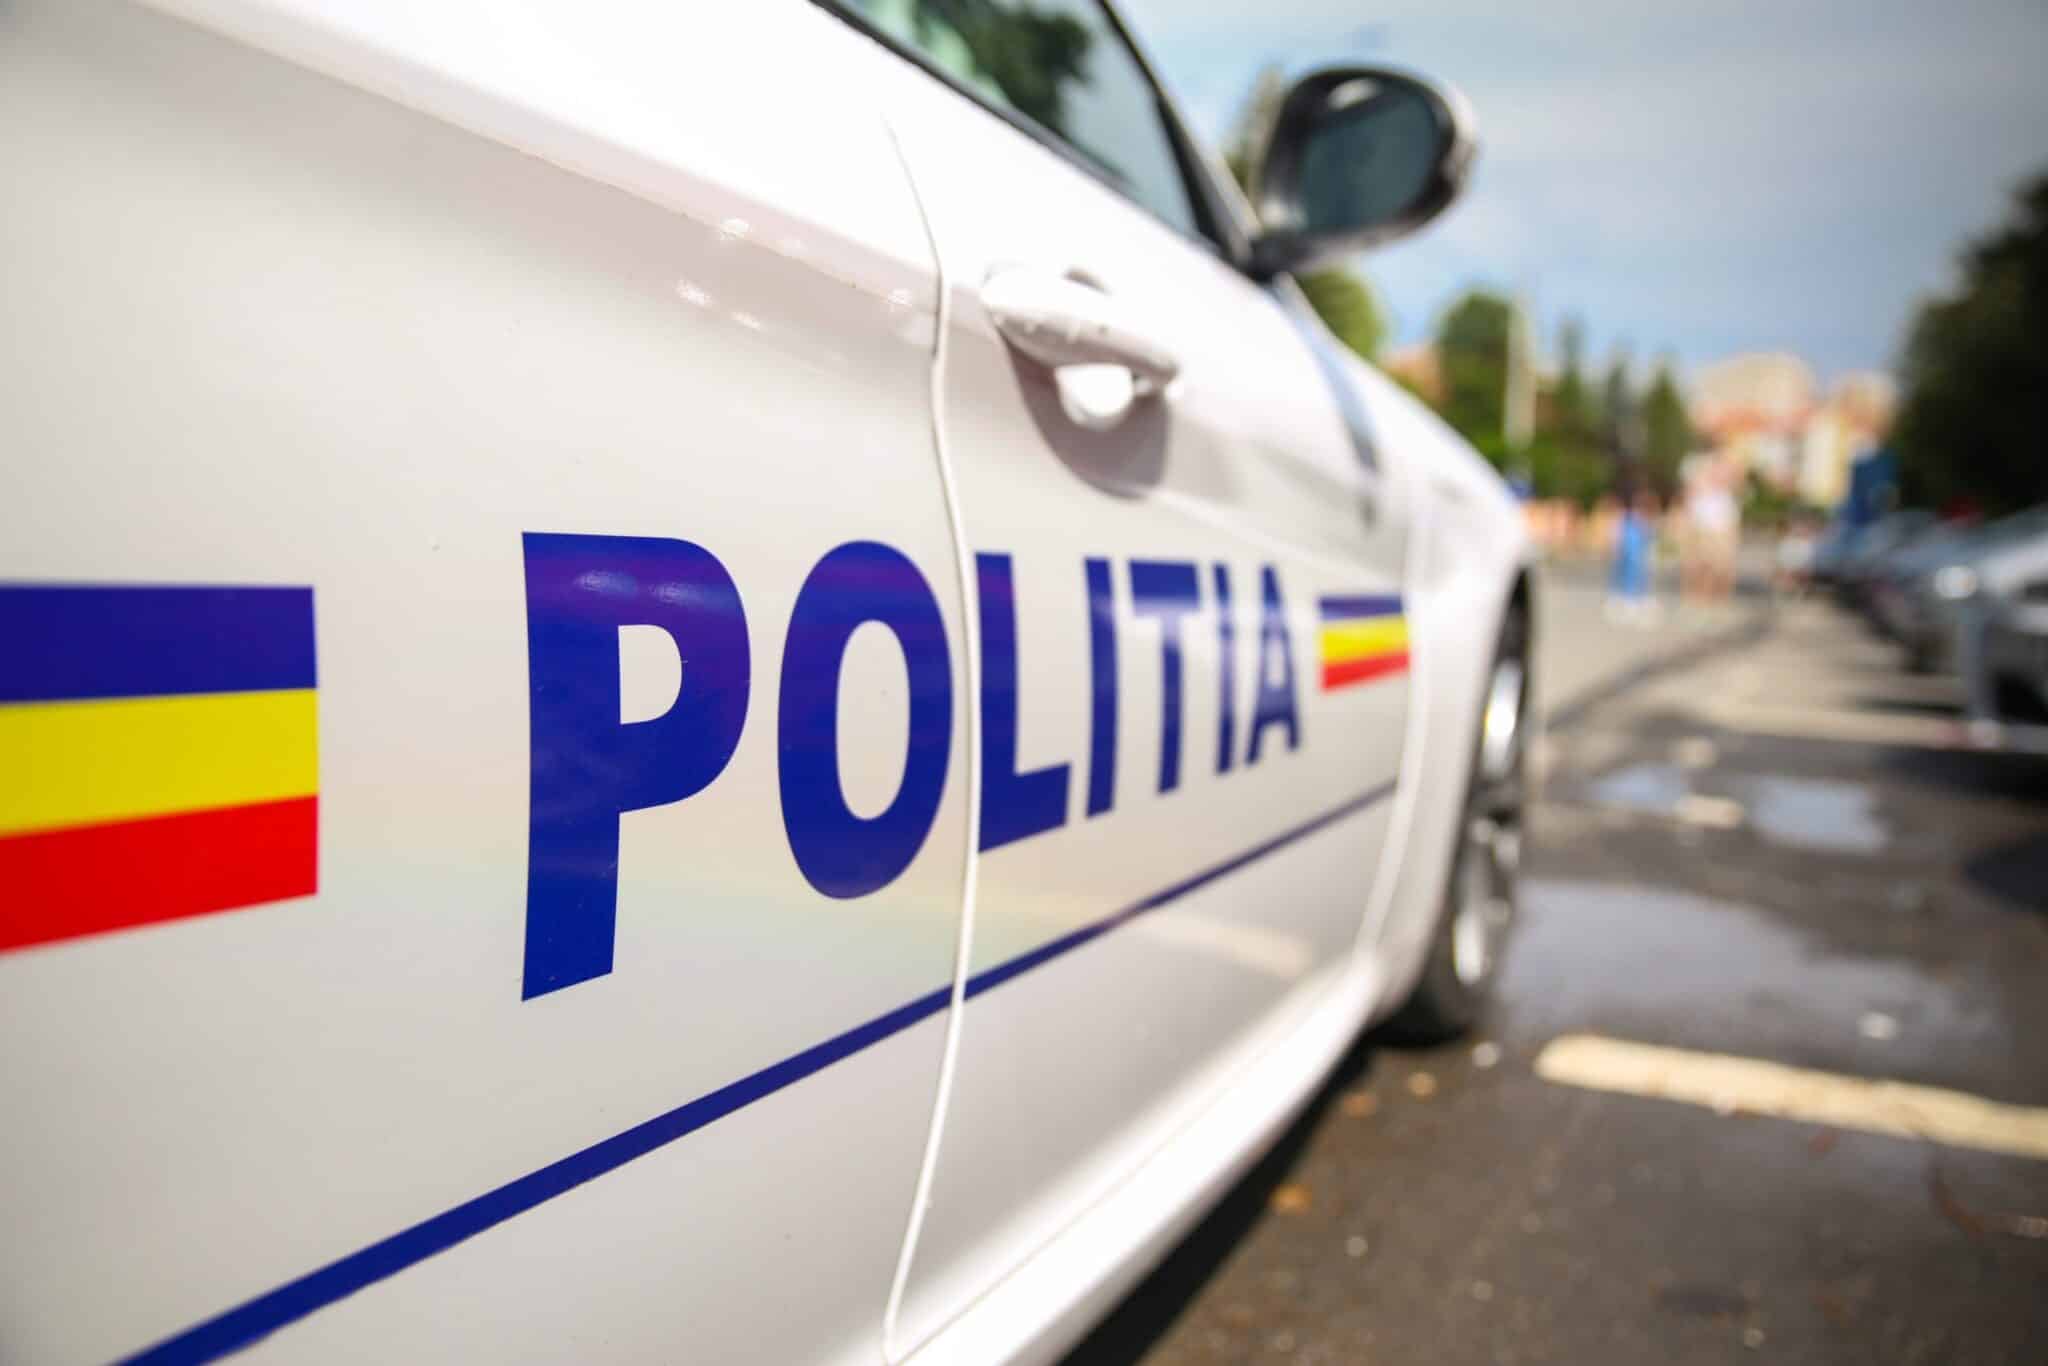 politia st 3 scaled 1 scaled - News Moldova